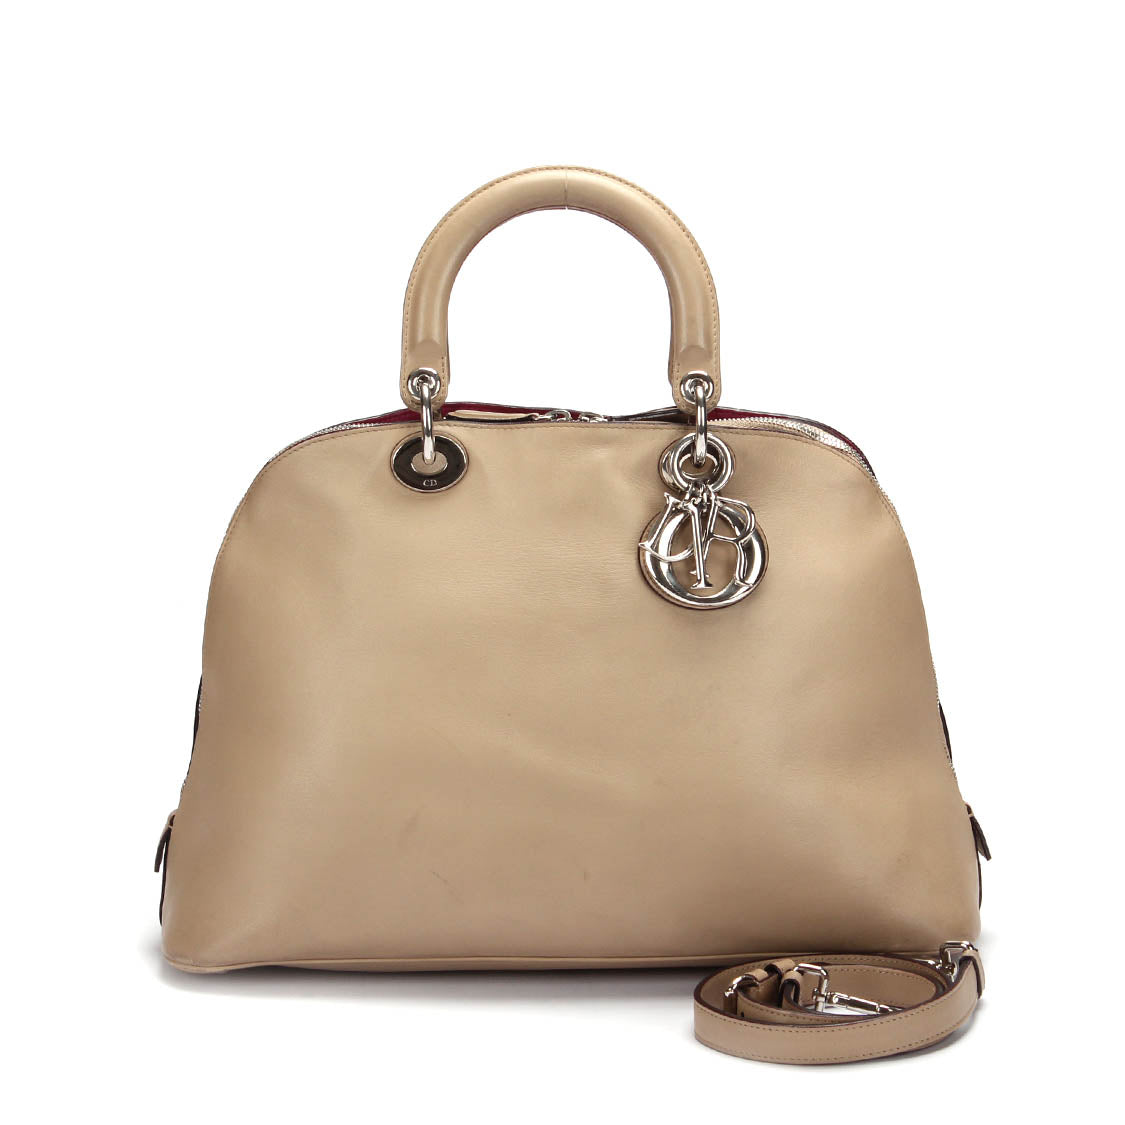 Leather Diorissimo Handbag